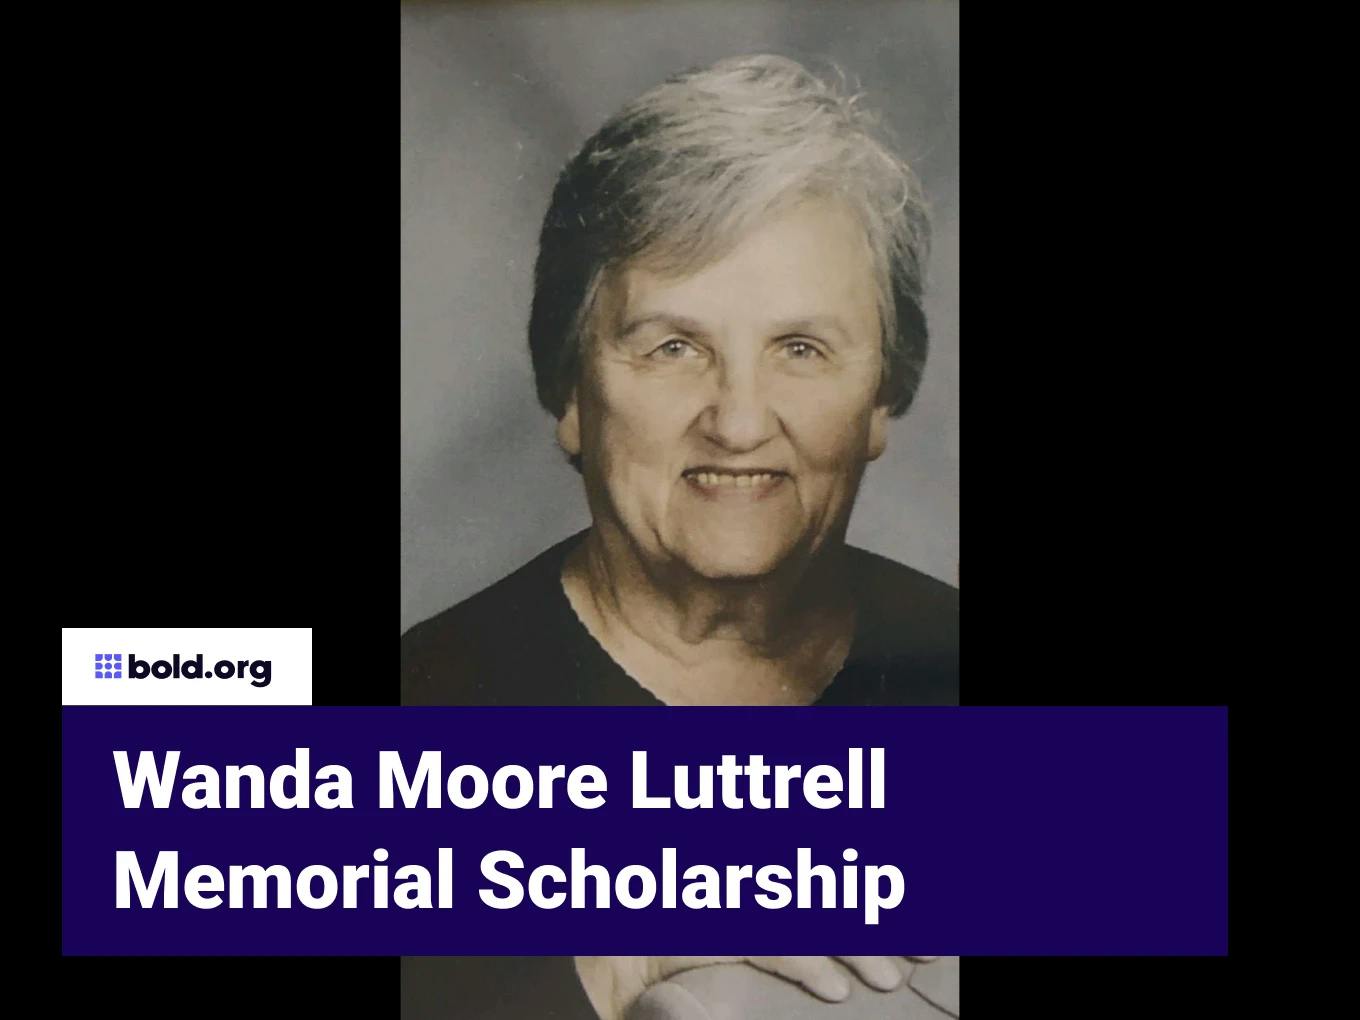 Wanda Moore Luttrell Memorial Scholarship